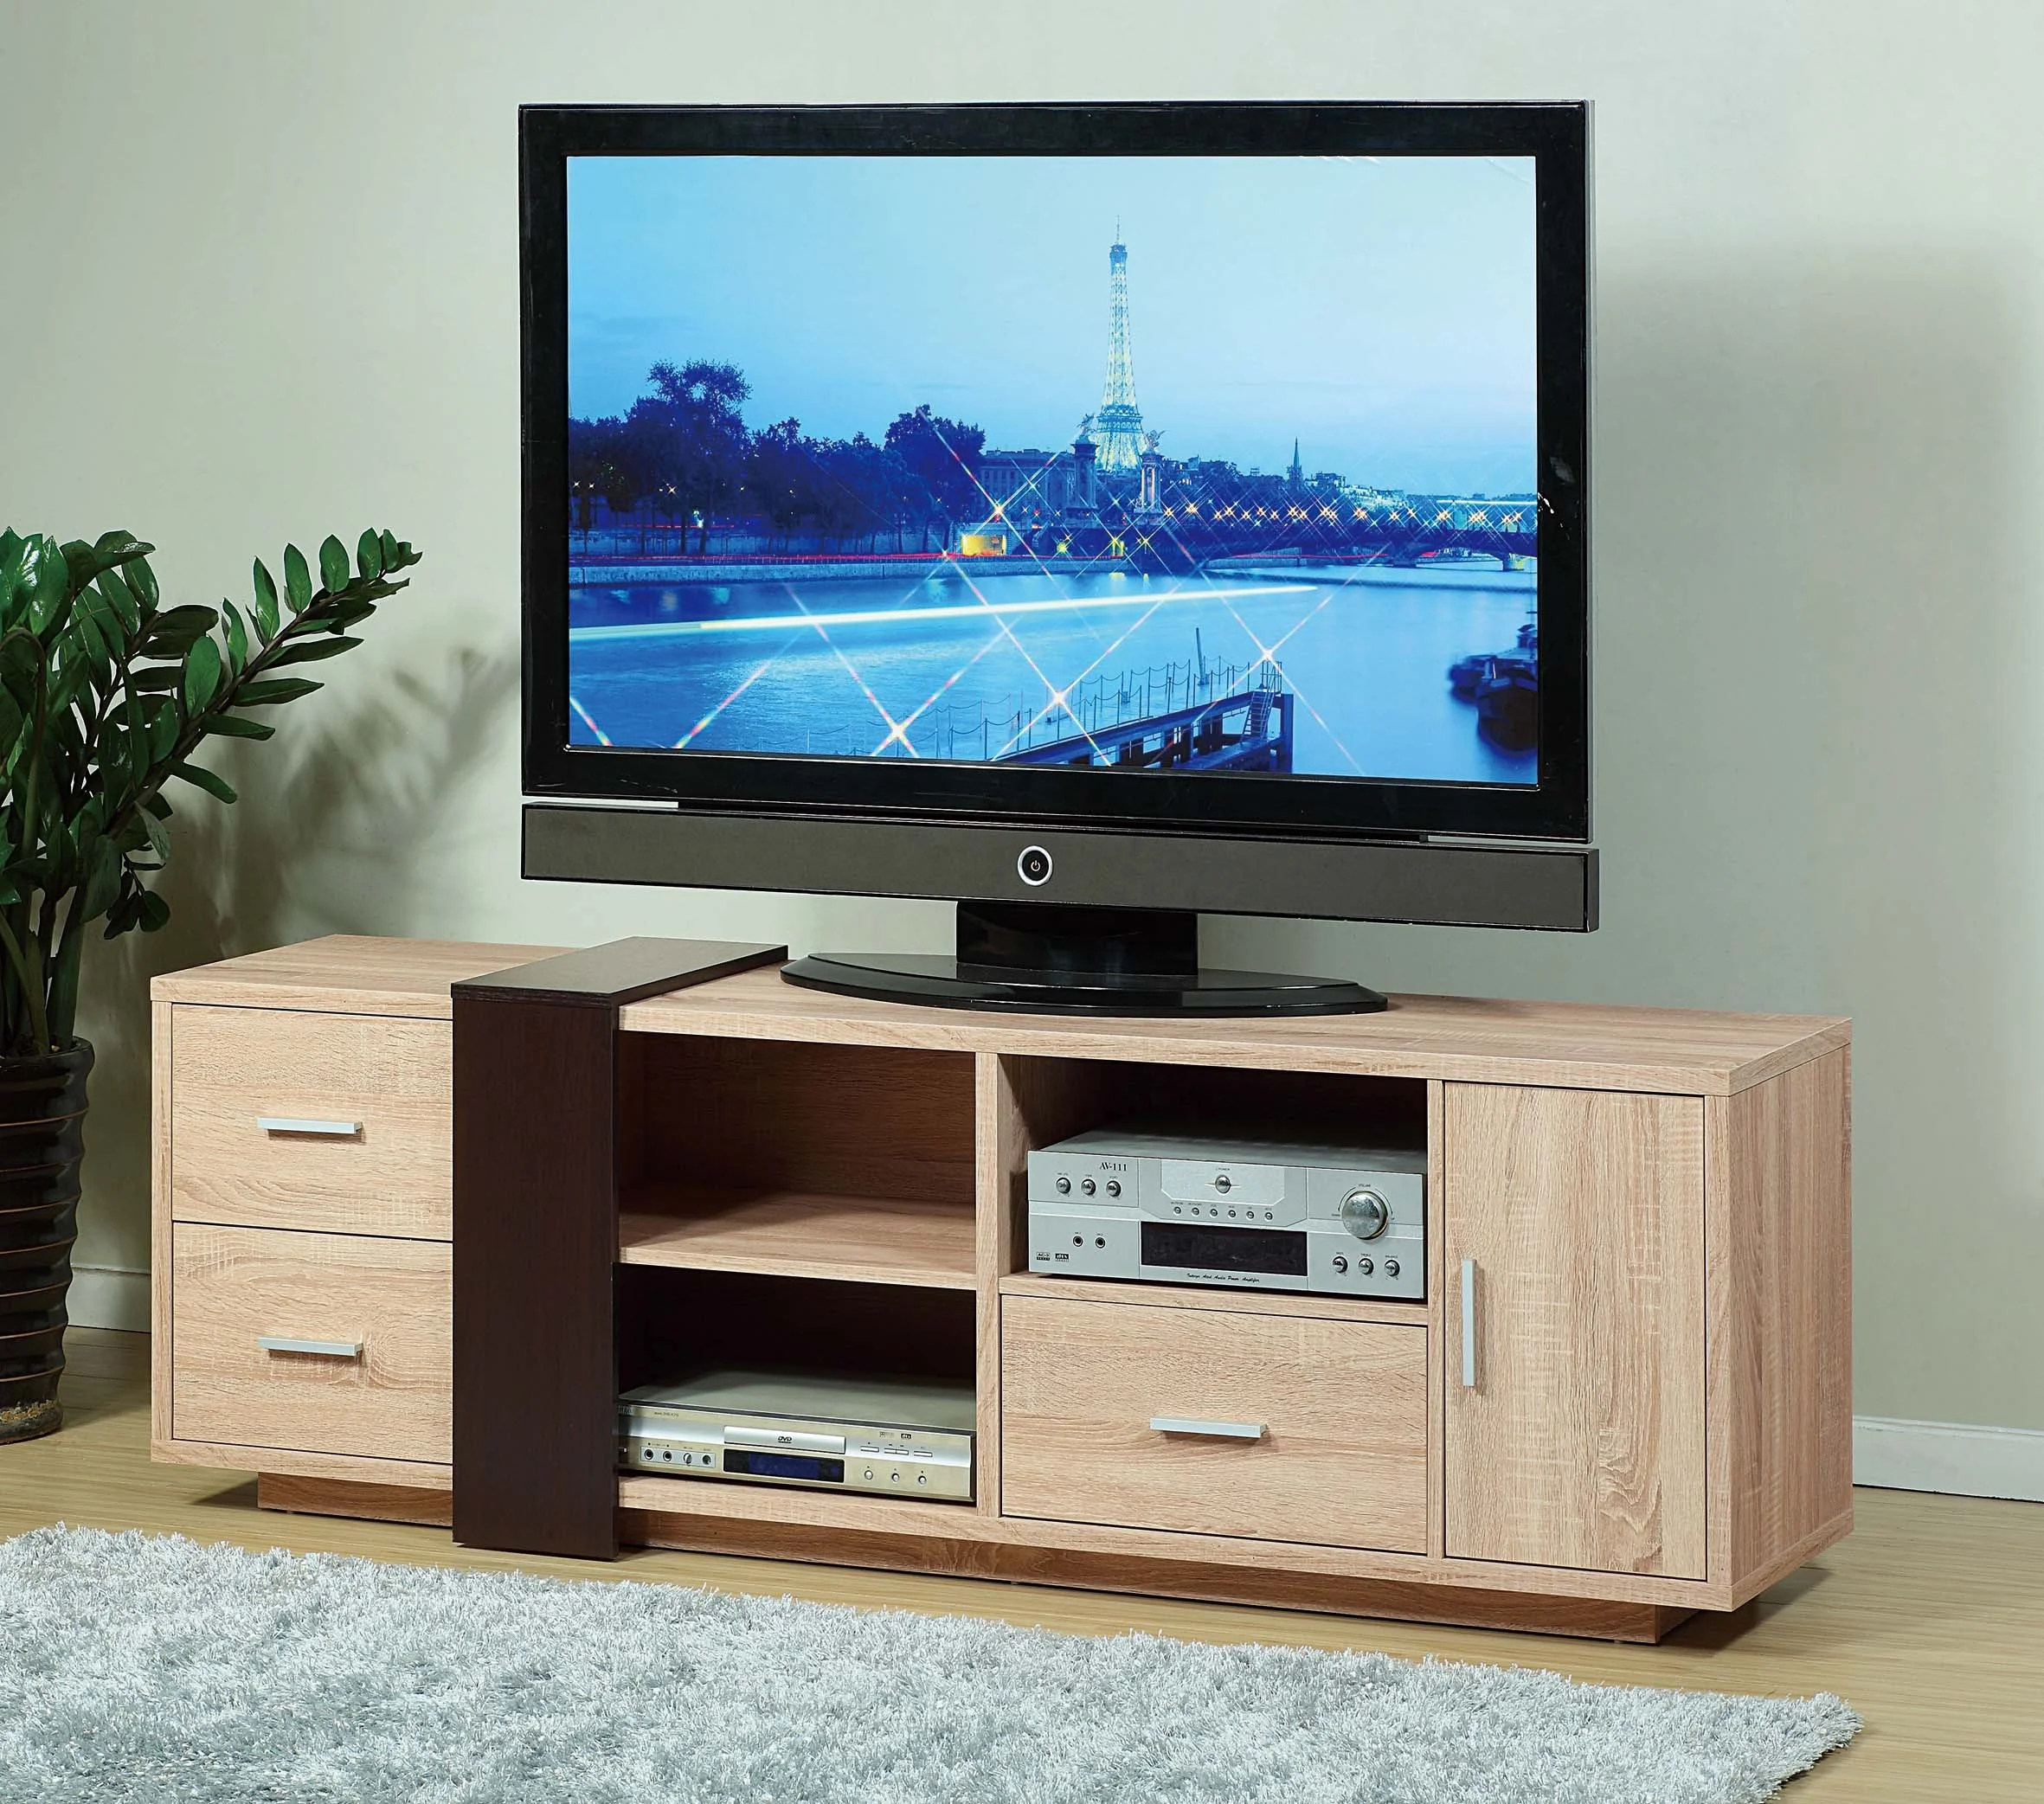 NOVA DMBQ051 Retro Design Living Room White Oak Storage TV Cabinet Solid Wood Model Tv Units Cabinet Furniture TV Stand